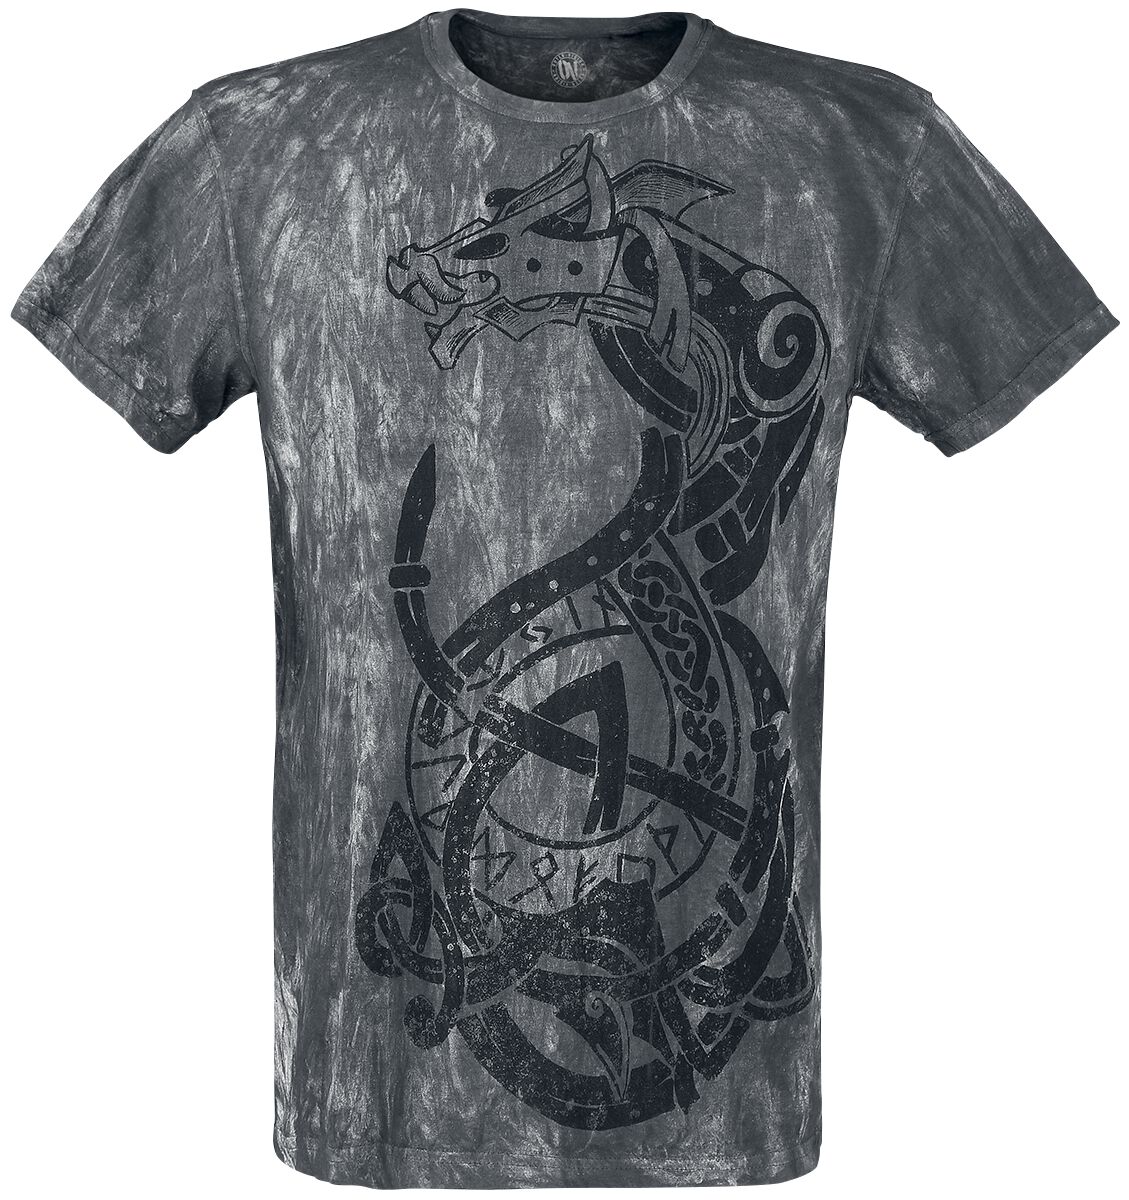 Outer Vision Viking Warrior T-Shirt grau in M